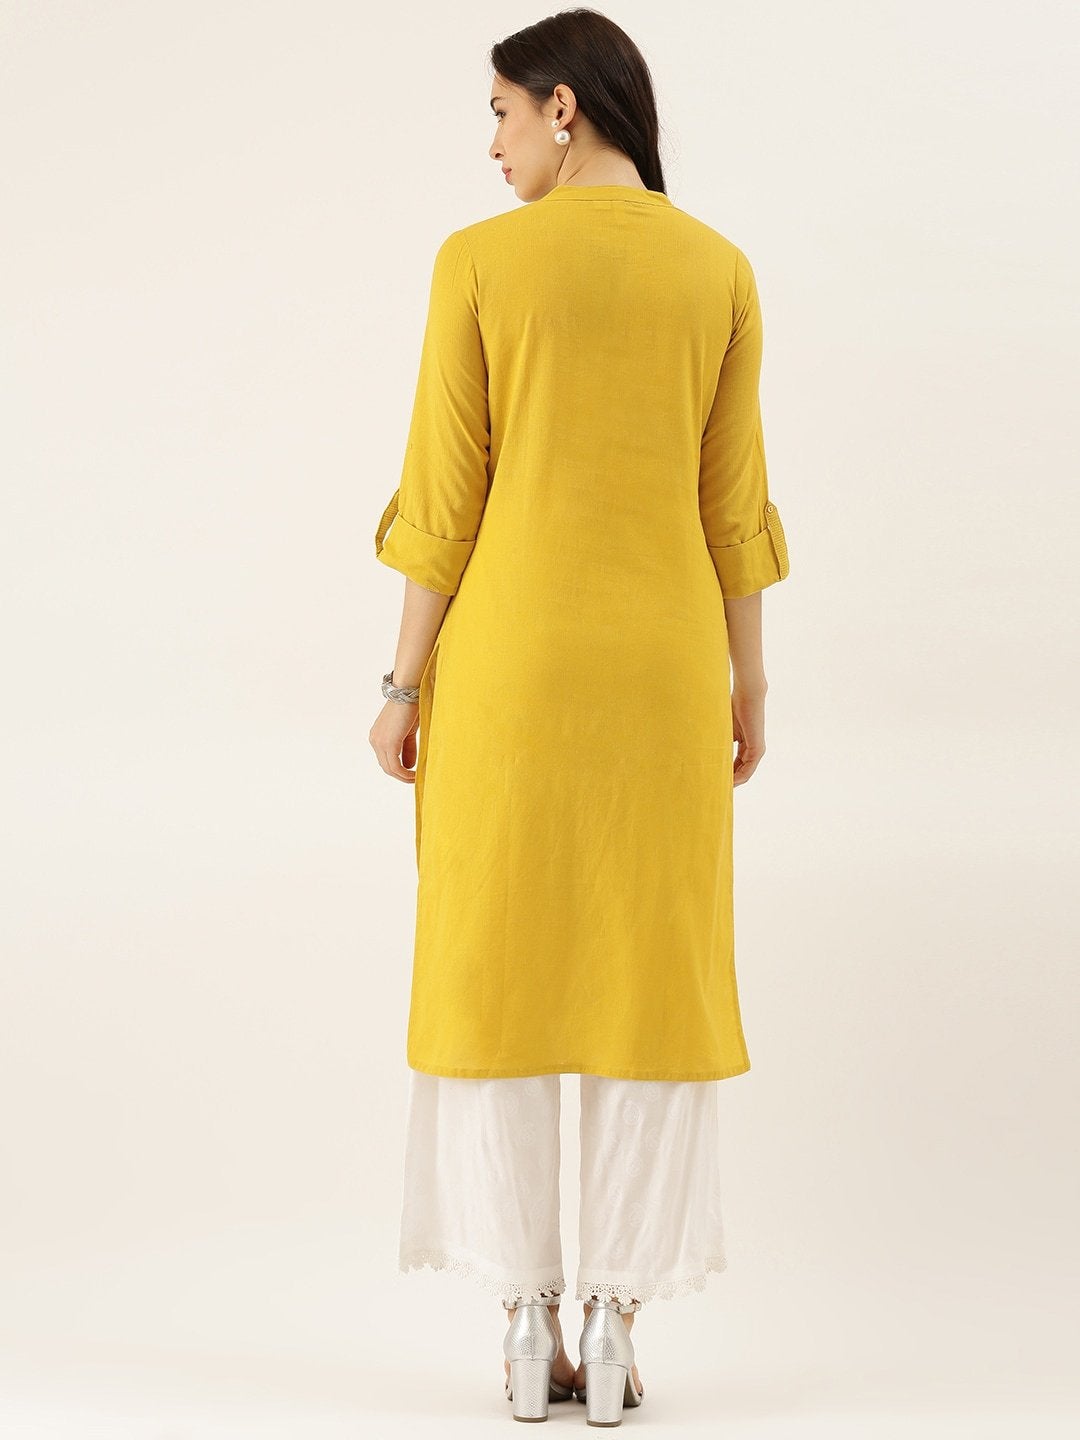 Women's Yellow Solid Straight Roll Up Sleeve Kurti - Noz2Toz